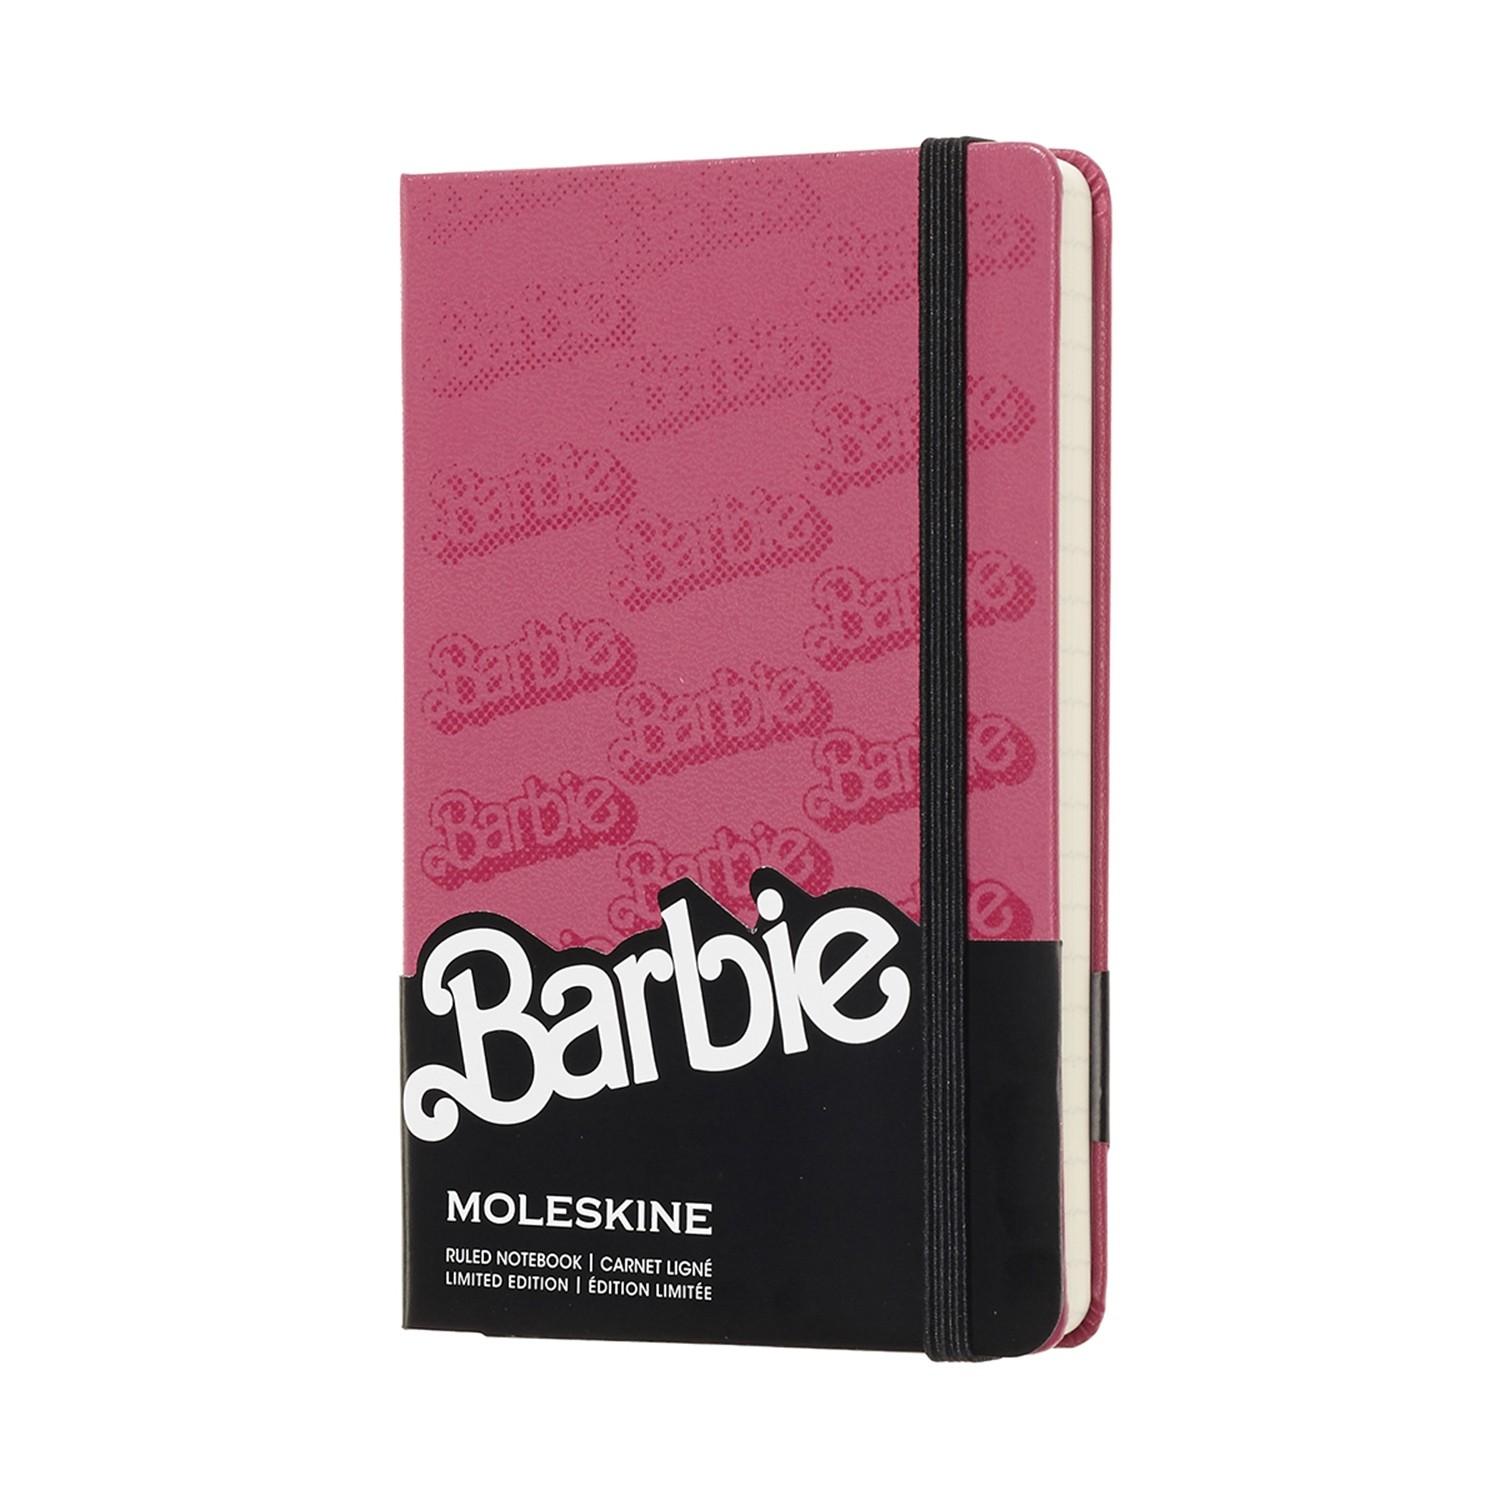 Moleskine Limited Edition Notebook Barbie Pocket RULED LOGO